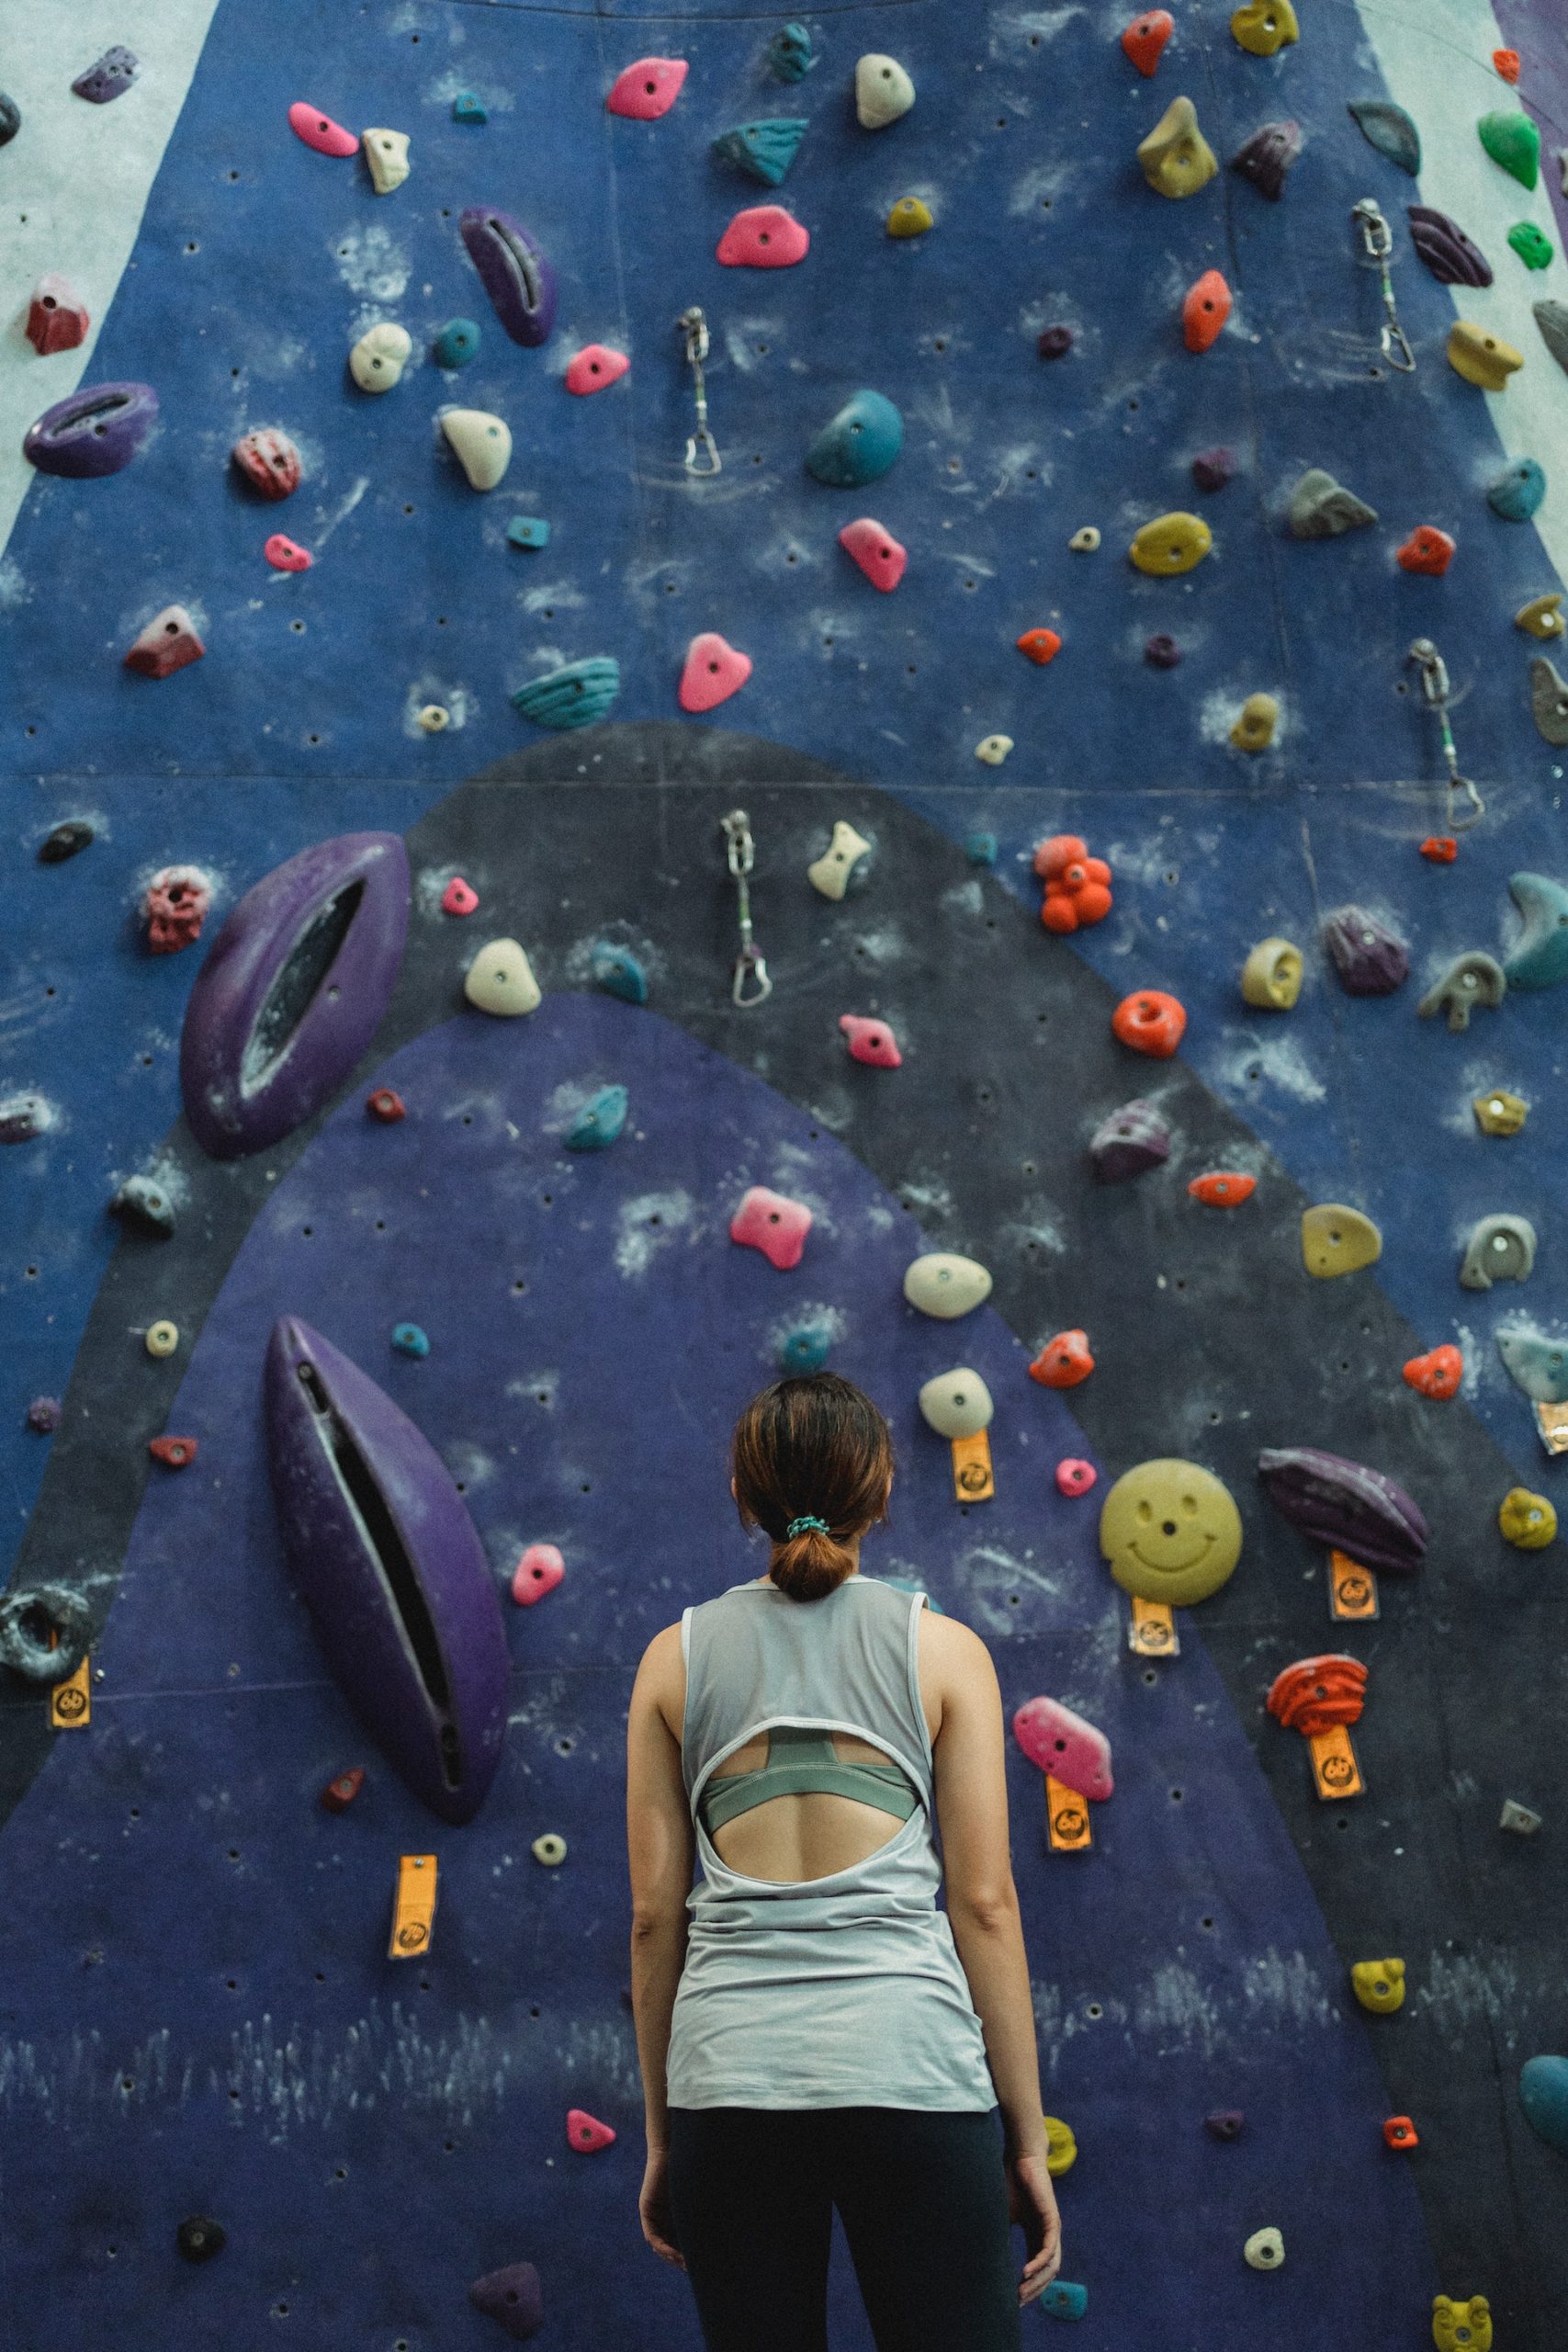 Photo by Allan Mas: https://www.pexels.com/photo/woman-preparing-for-climbing-high-on-wall-5383501/